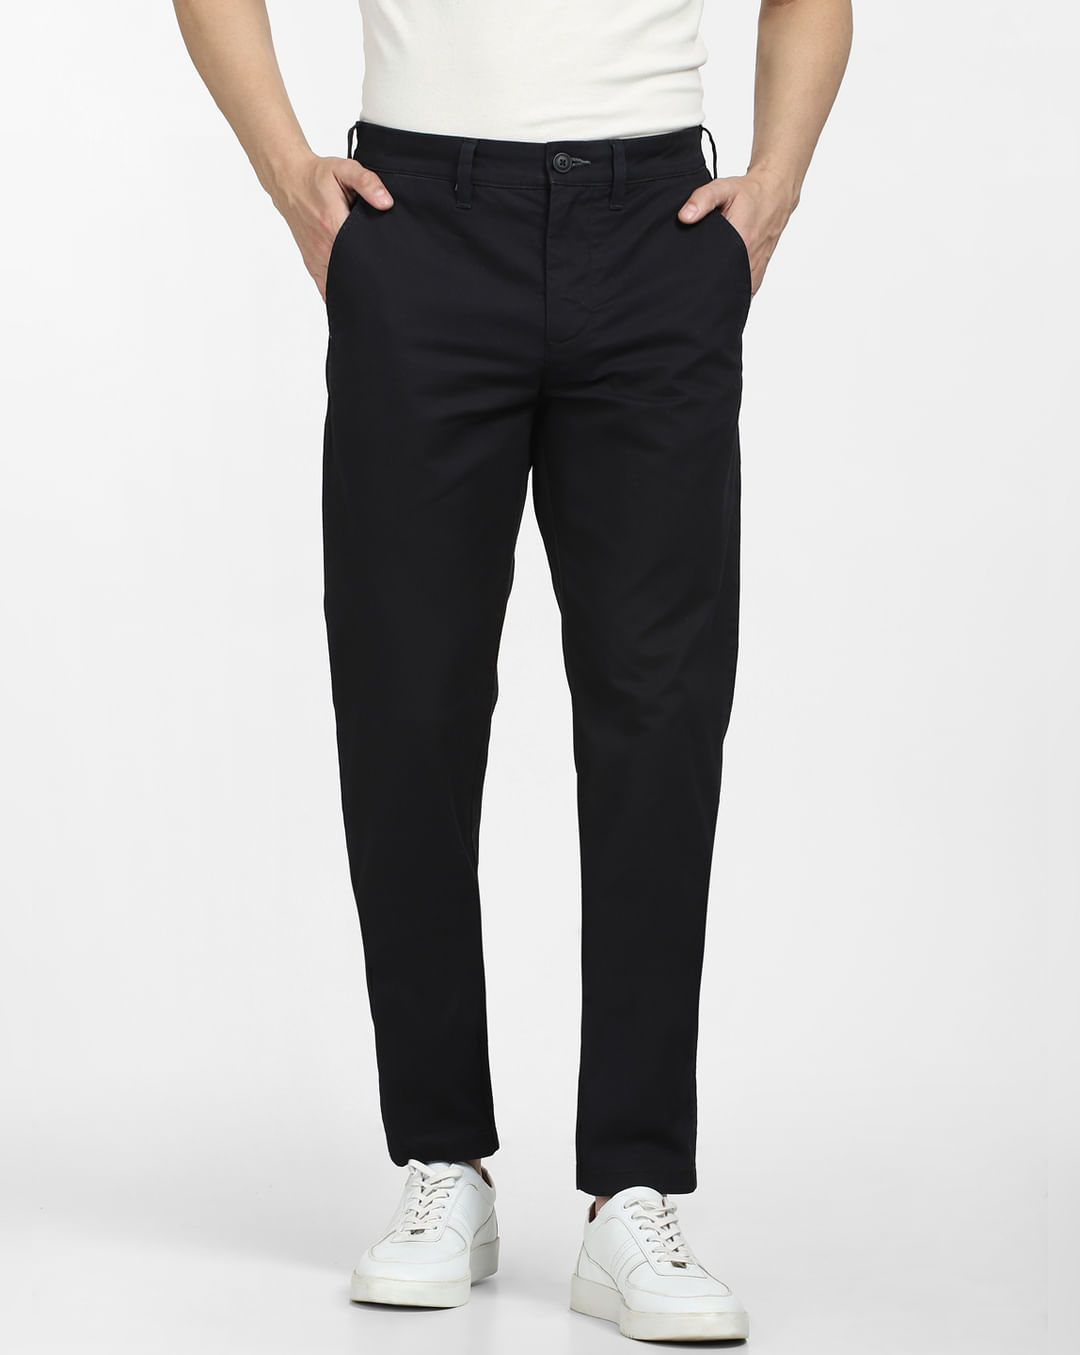 Buy Black Mid Rise Slim Fit Pants for Men Online at SELECTED HOMME ...